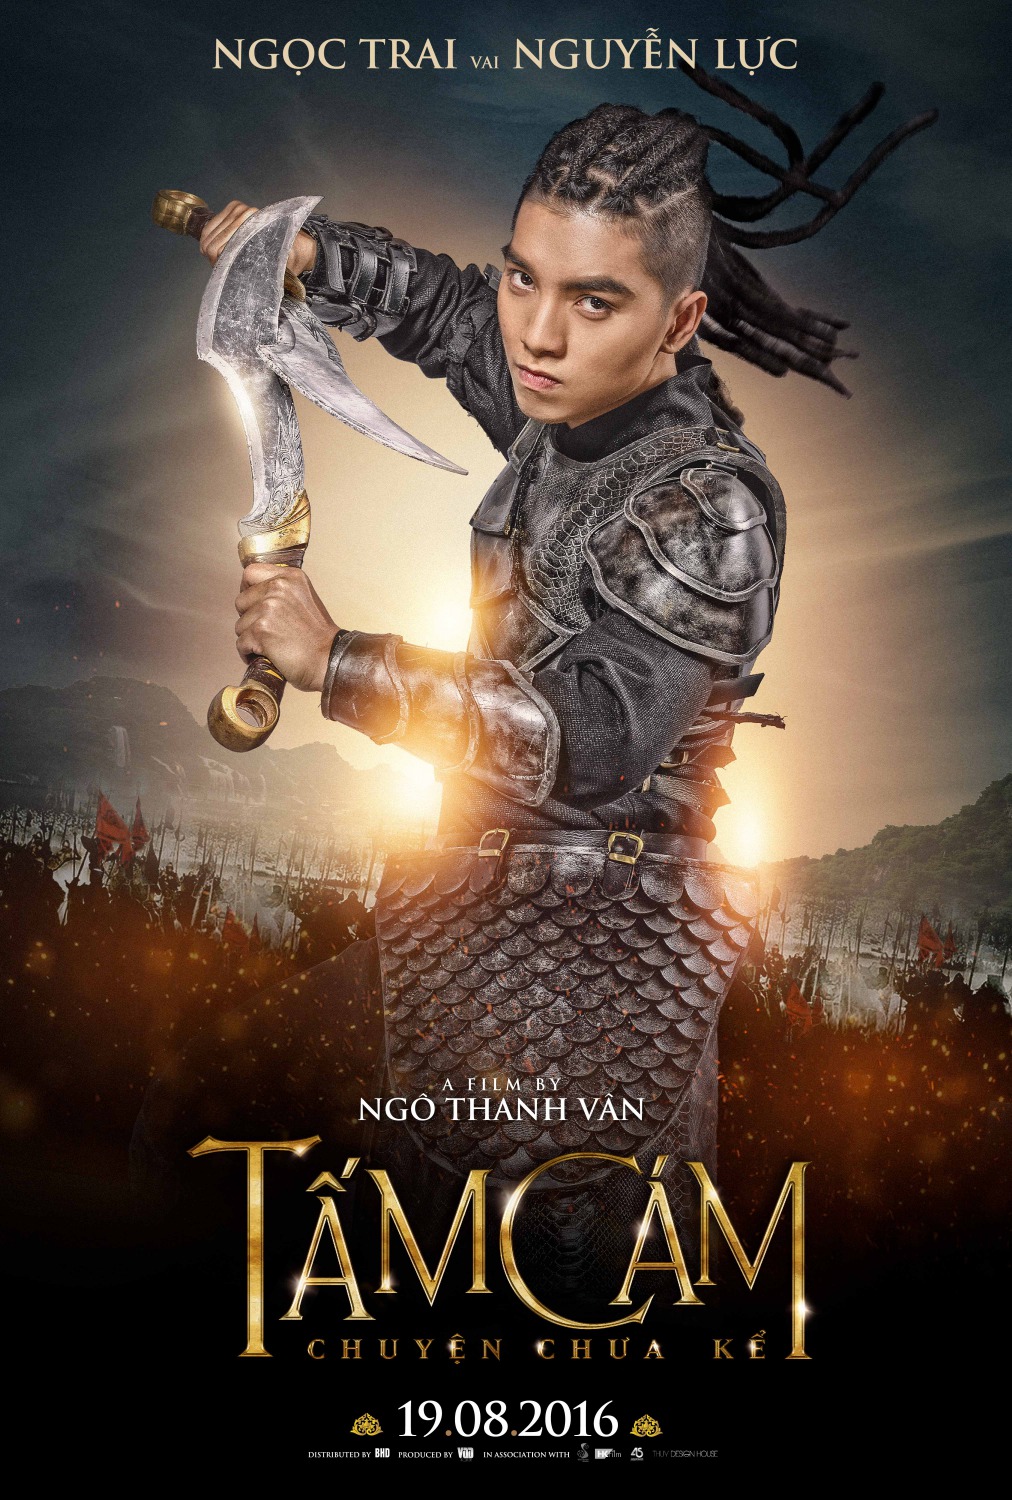 Extra Large Movie Poster Image for Tam Cam: Chuyen Chua Ke (#13 of 15)